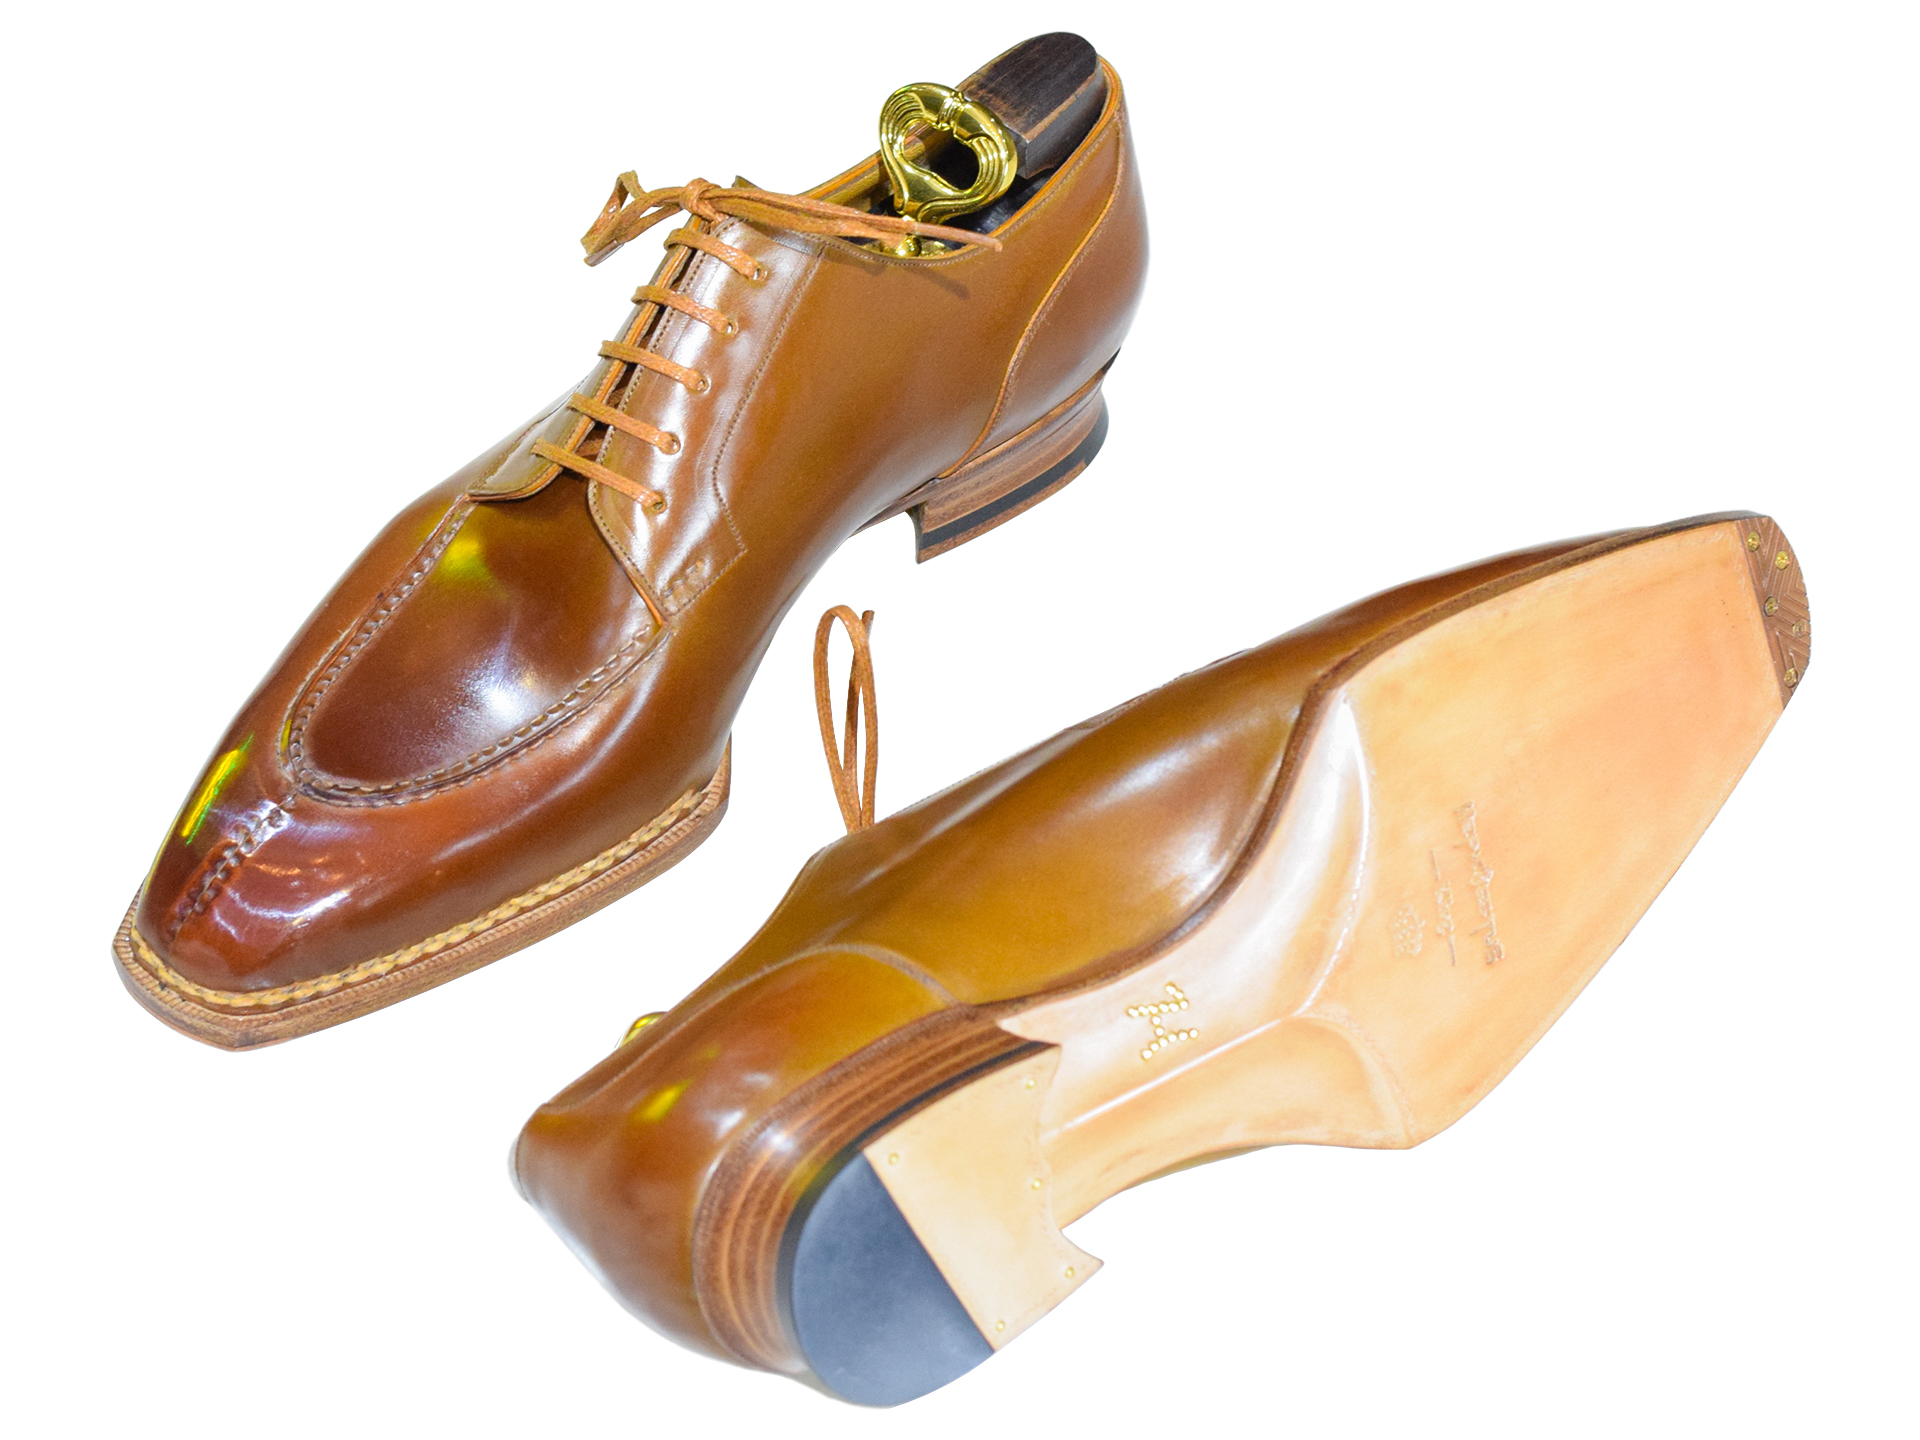 MTO Split toe shoes Shell cordovan leather - Optimum line